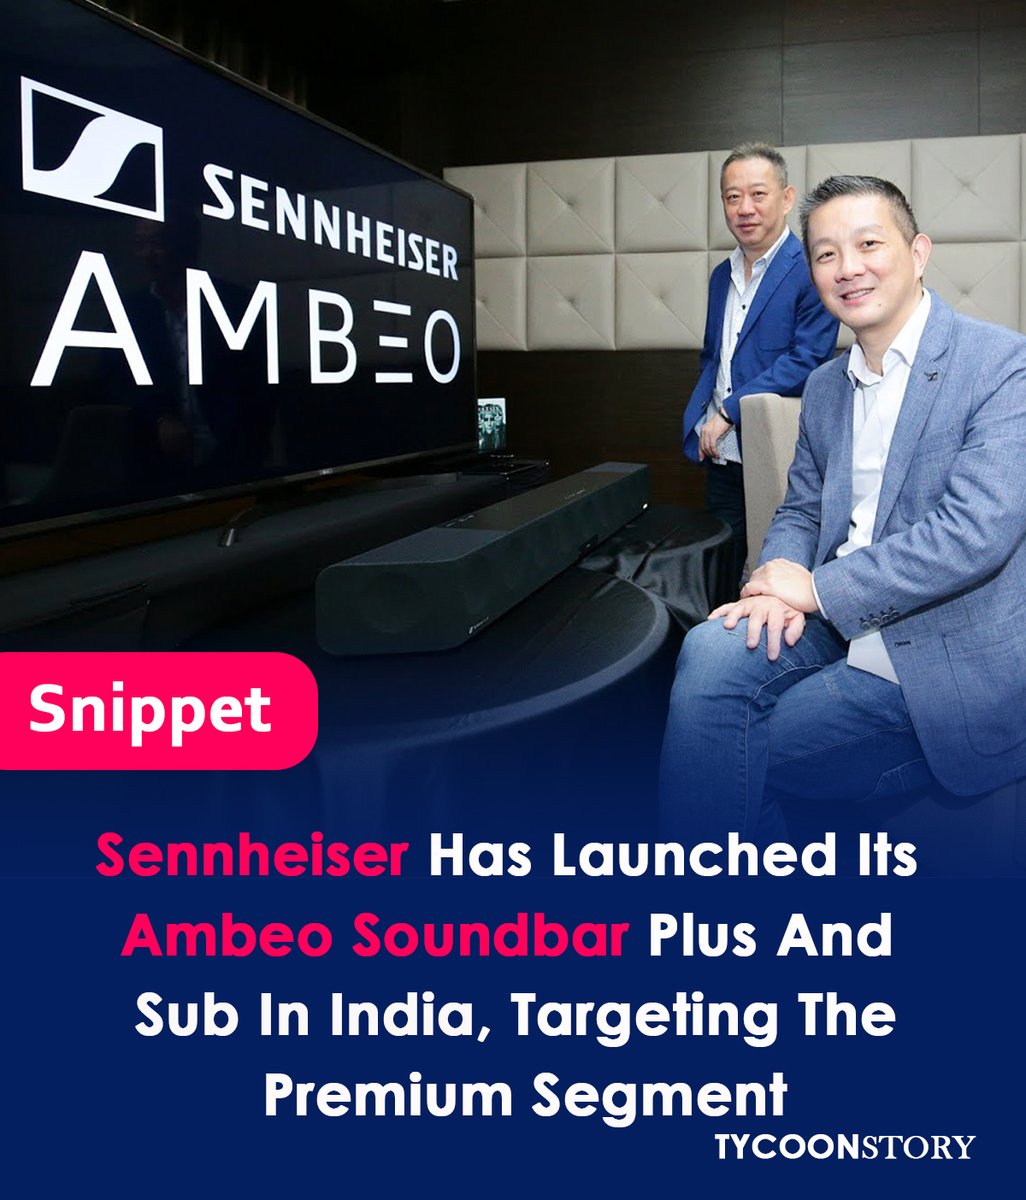 In India, Sennheiser Releases The Ambeo Soundbar Plus And Ambeo Sub.
#sennheiser #ambeosoundbarplus #ambeosub #india #launch #audio #soundbar #hometheater #dolbyatmos #surroundsound #music
#innovation #technology #gadgets #premiumaudio #homeentertainment  @Sennheiser